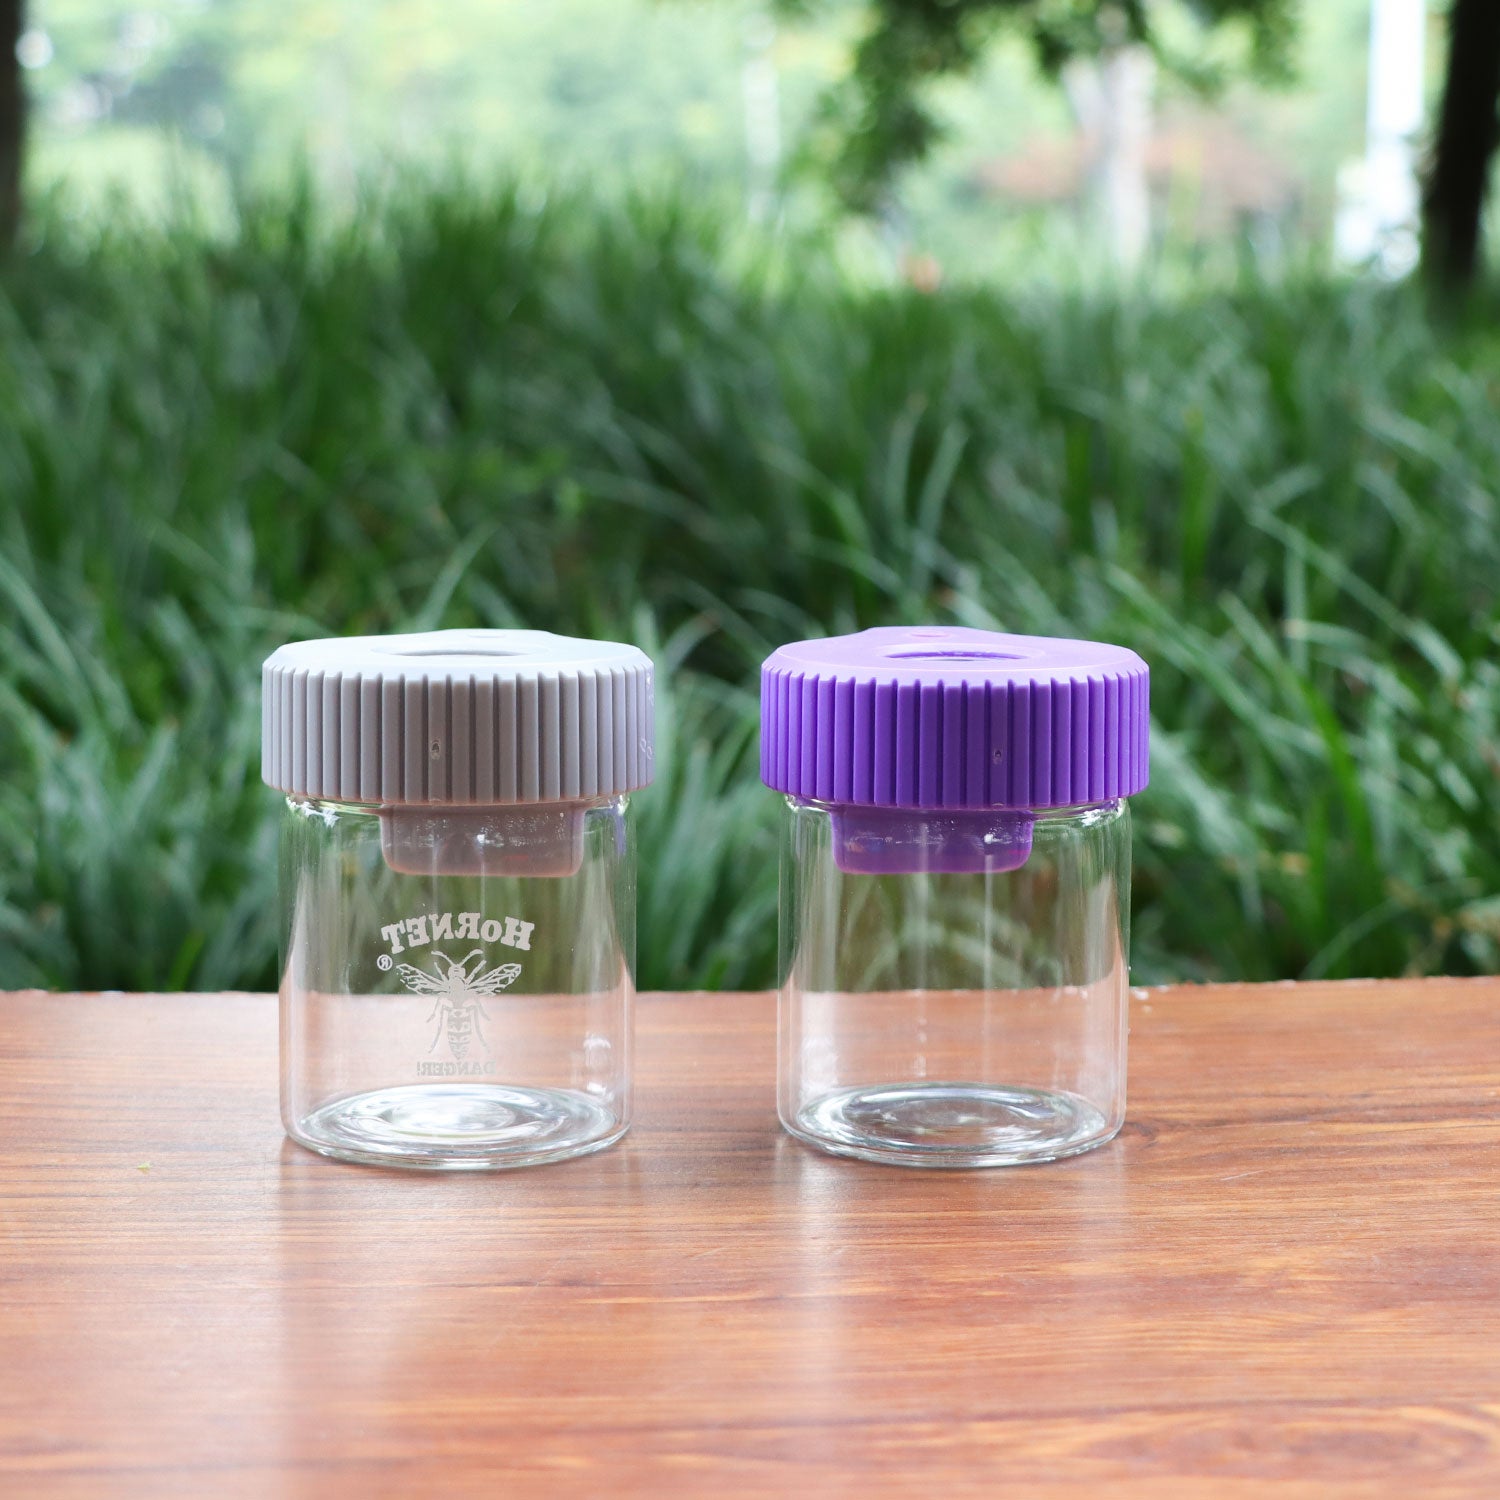 HORNET Light-Up Led Glass Storage Jar, Air Tight & Magnifying View Jar, Grey Color Jar Lid, Rechargeable Glass Jar